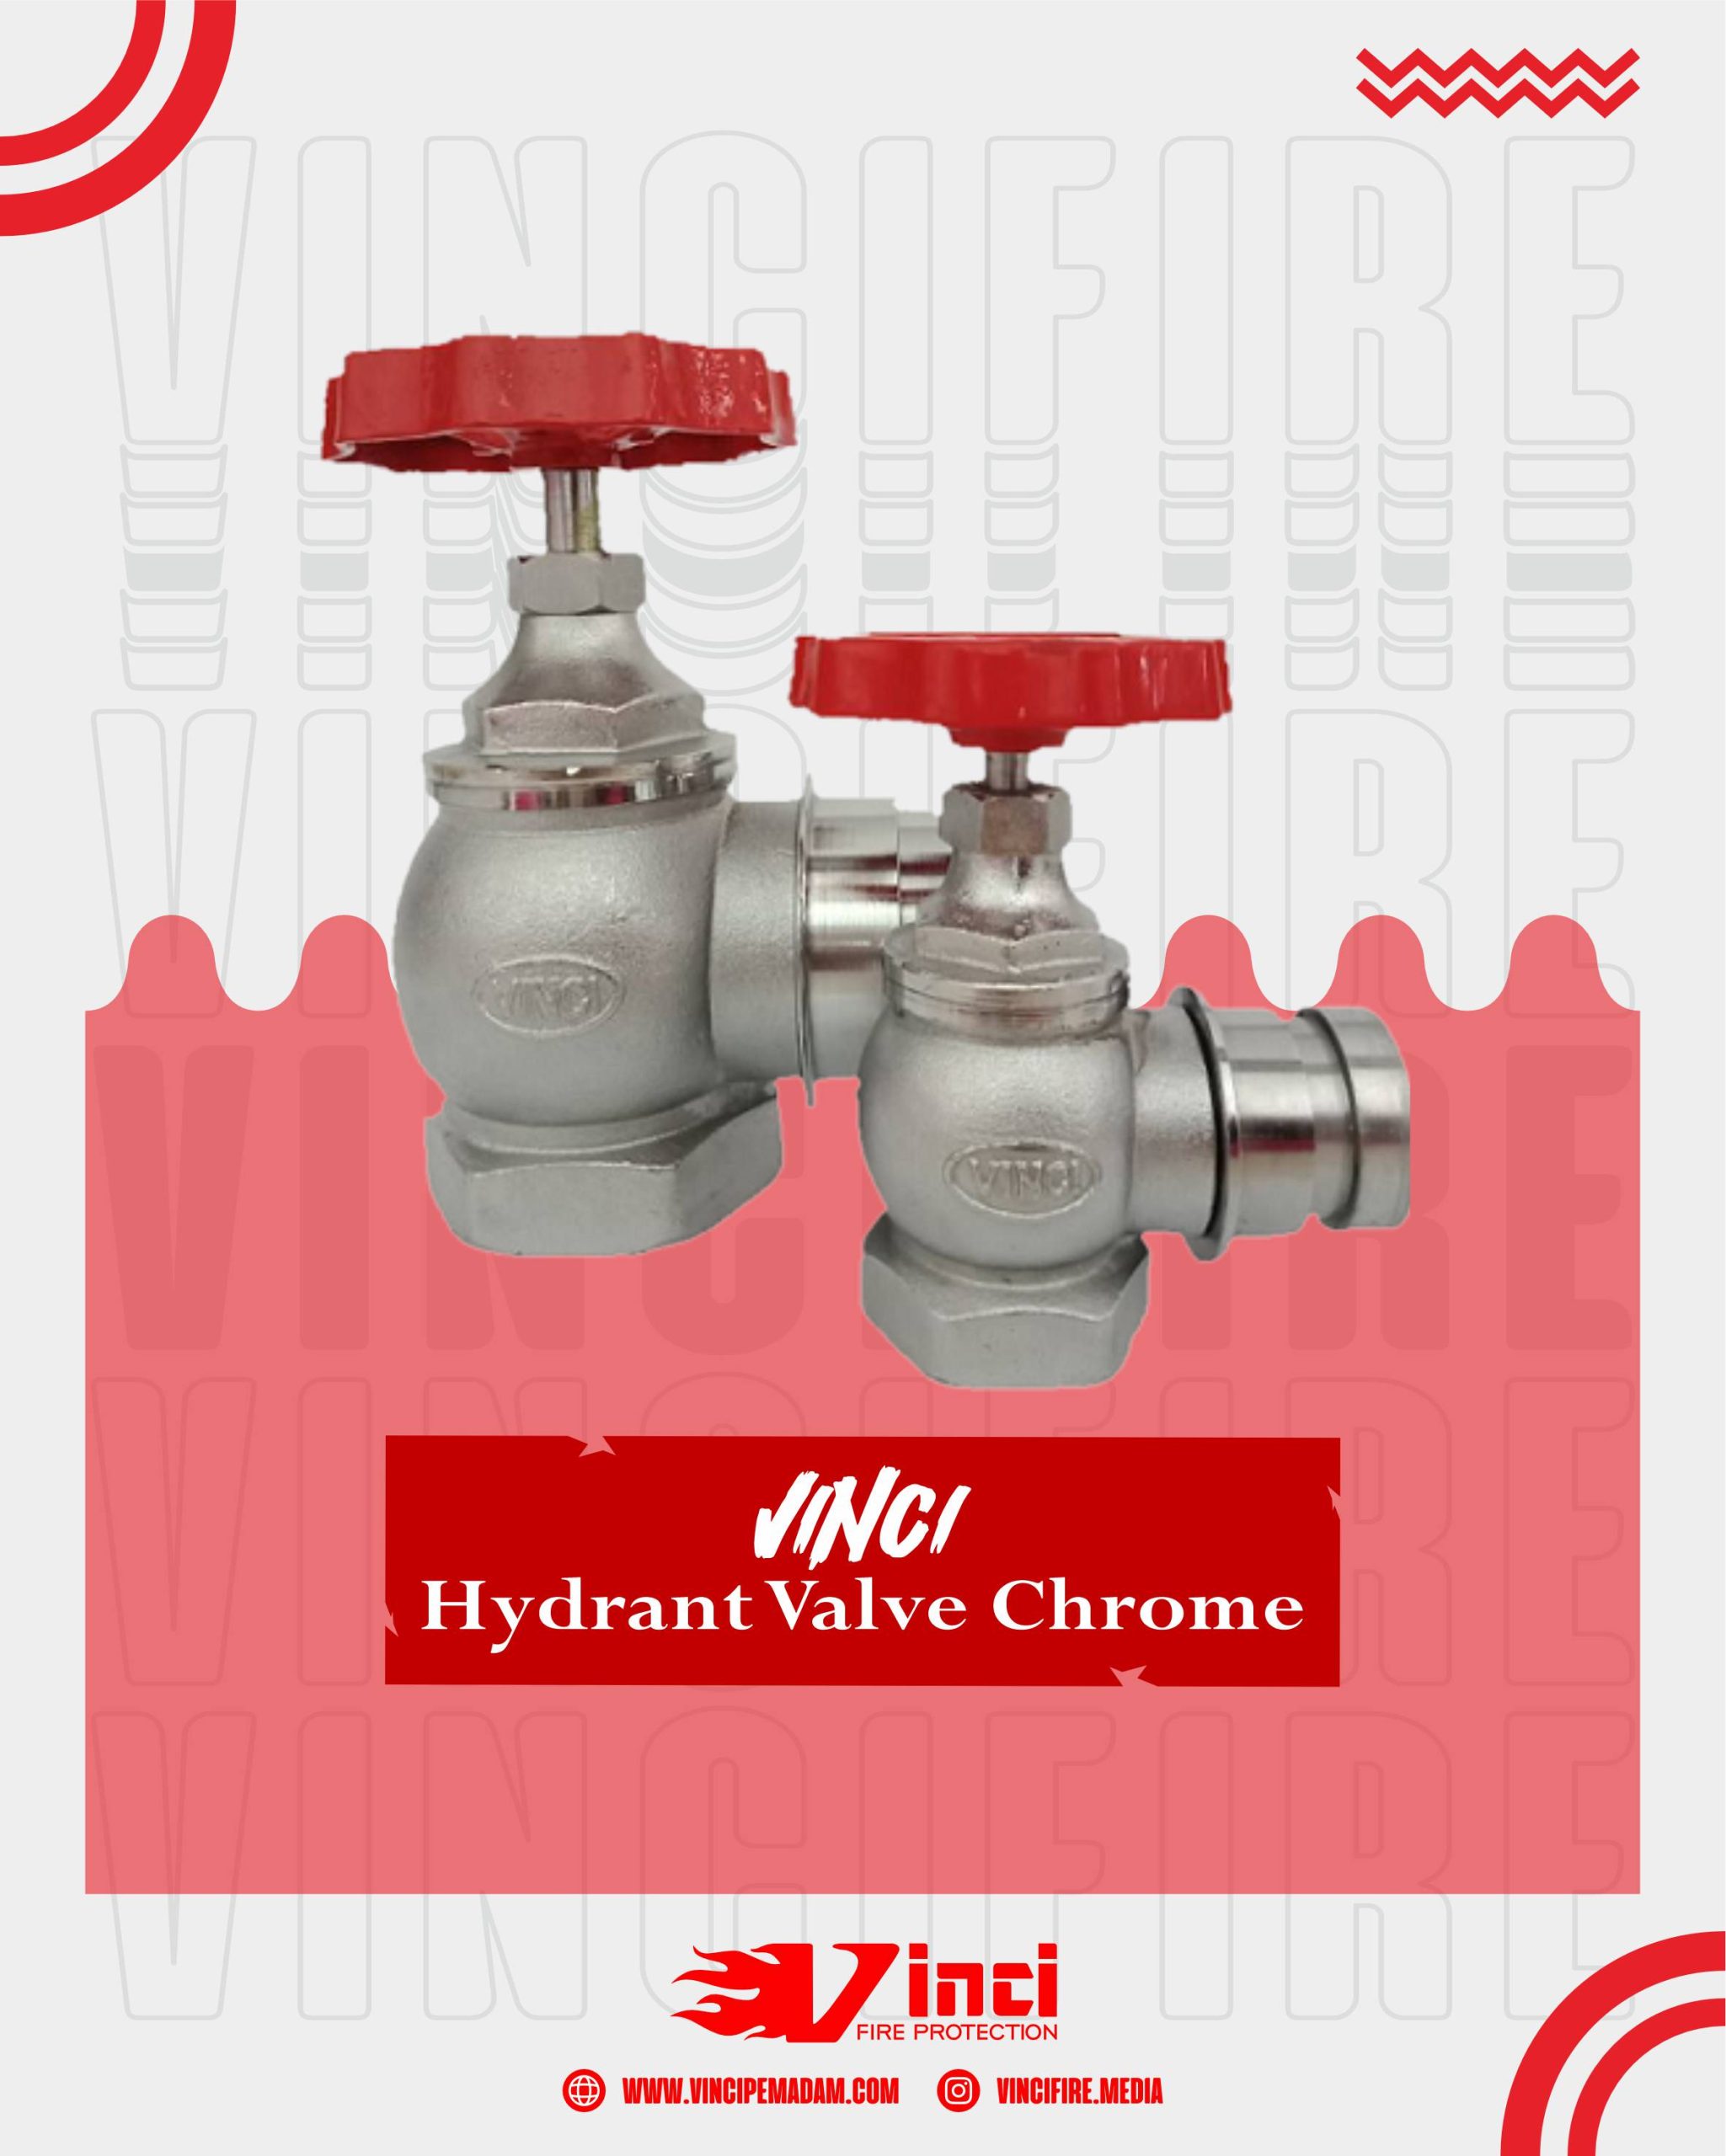 Vinci Hydrant Valve Chrome